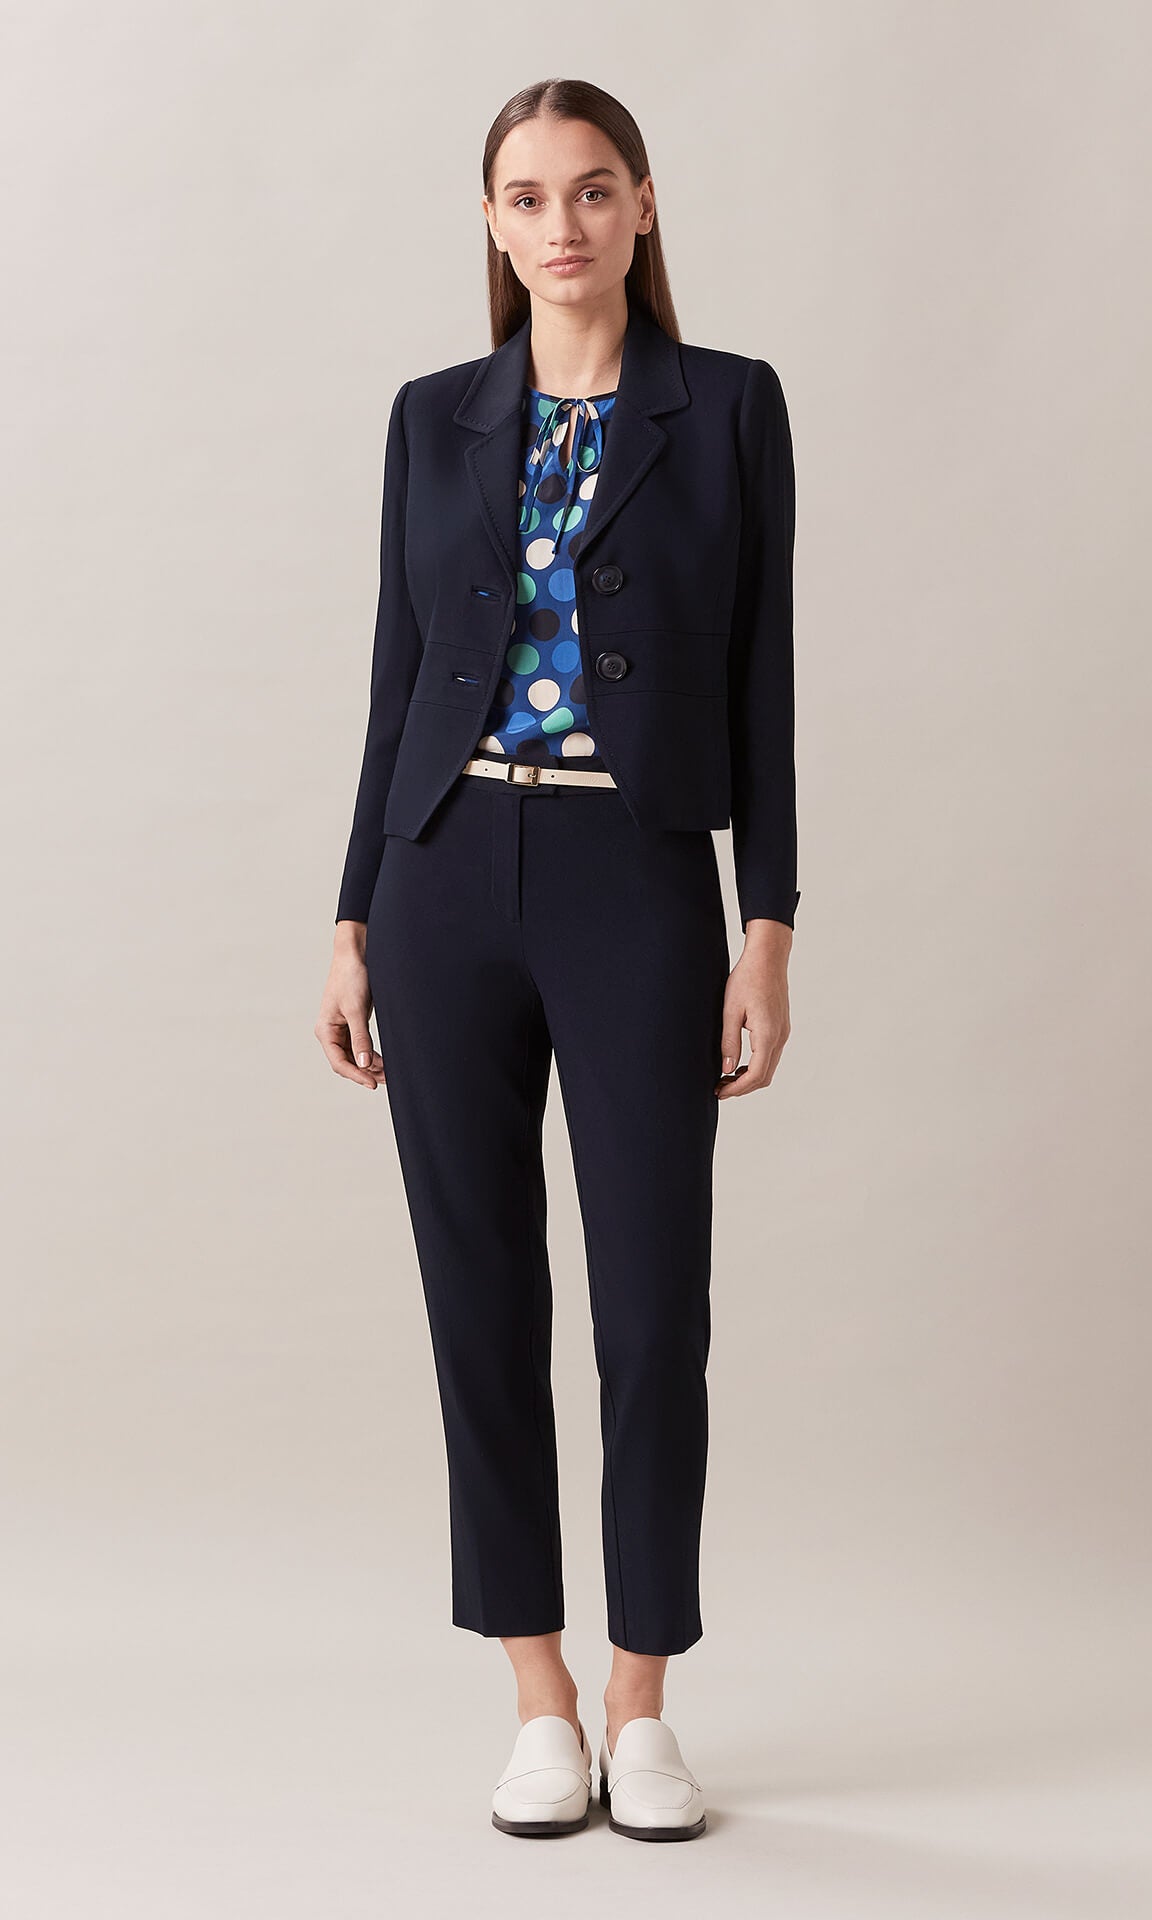 Women Work Ladies Long Sleeve Slim Fit Casual Blazer Suit Jacket Coat  Outwear | eBay